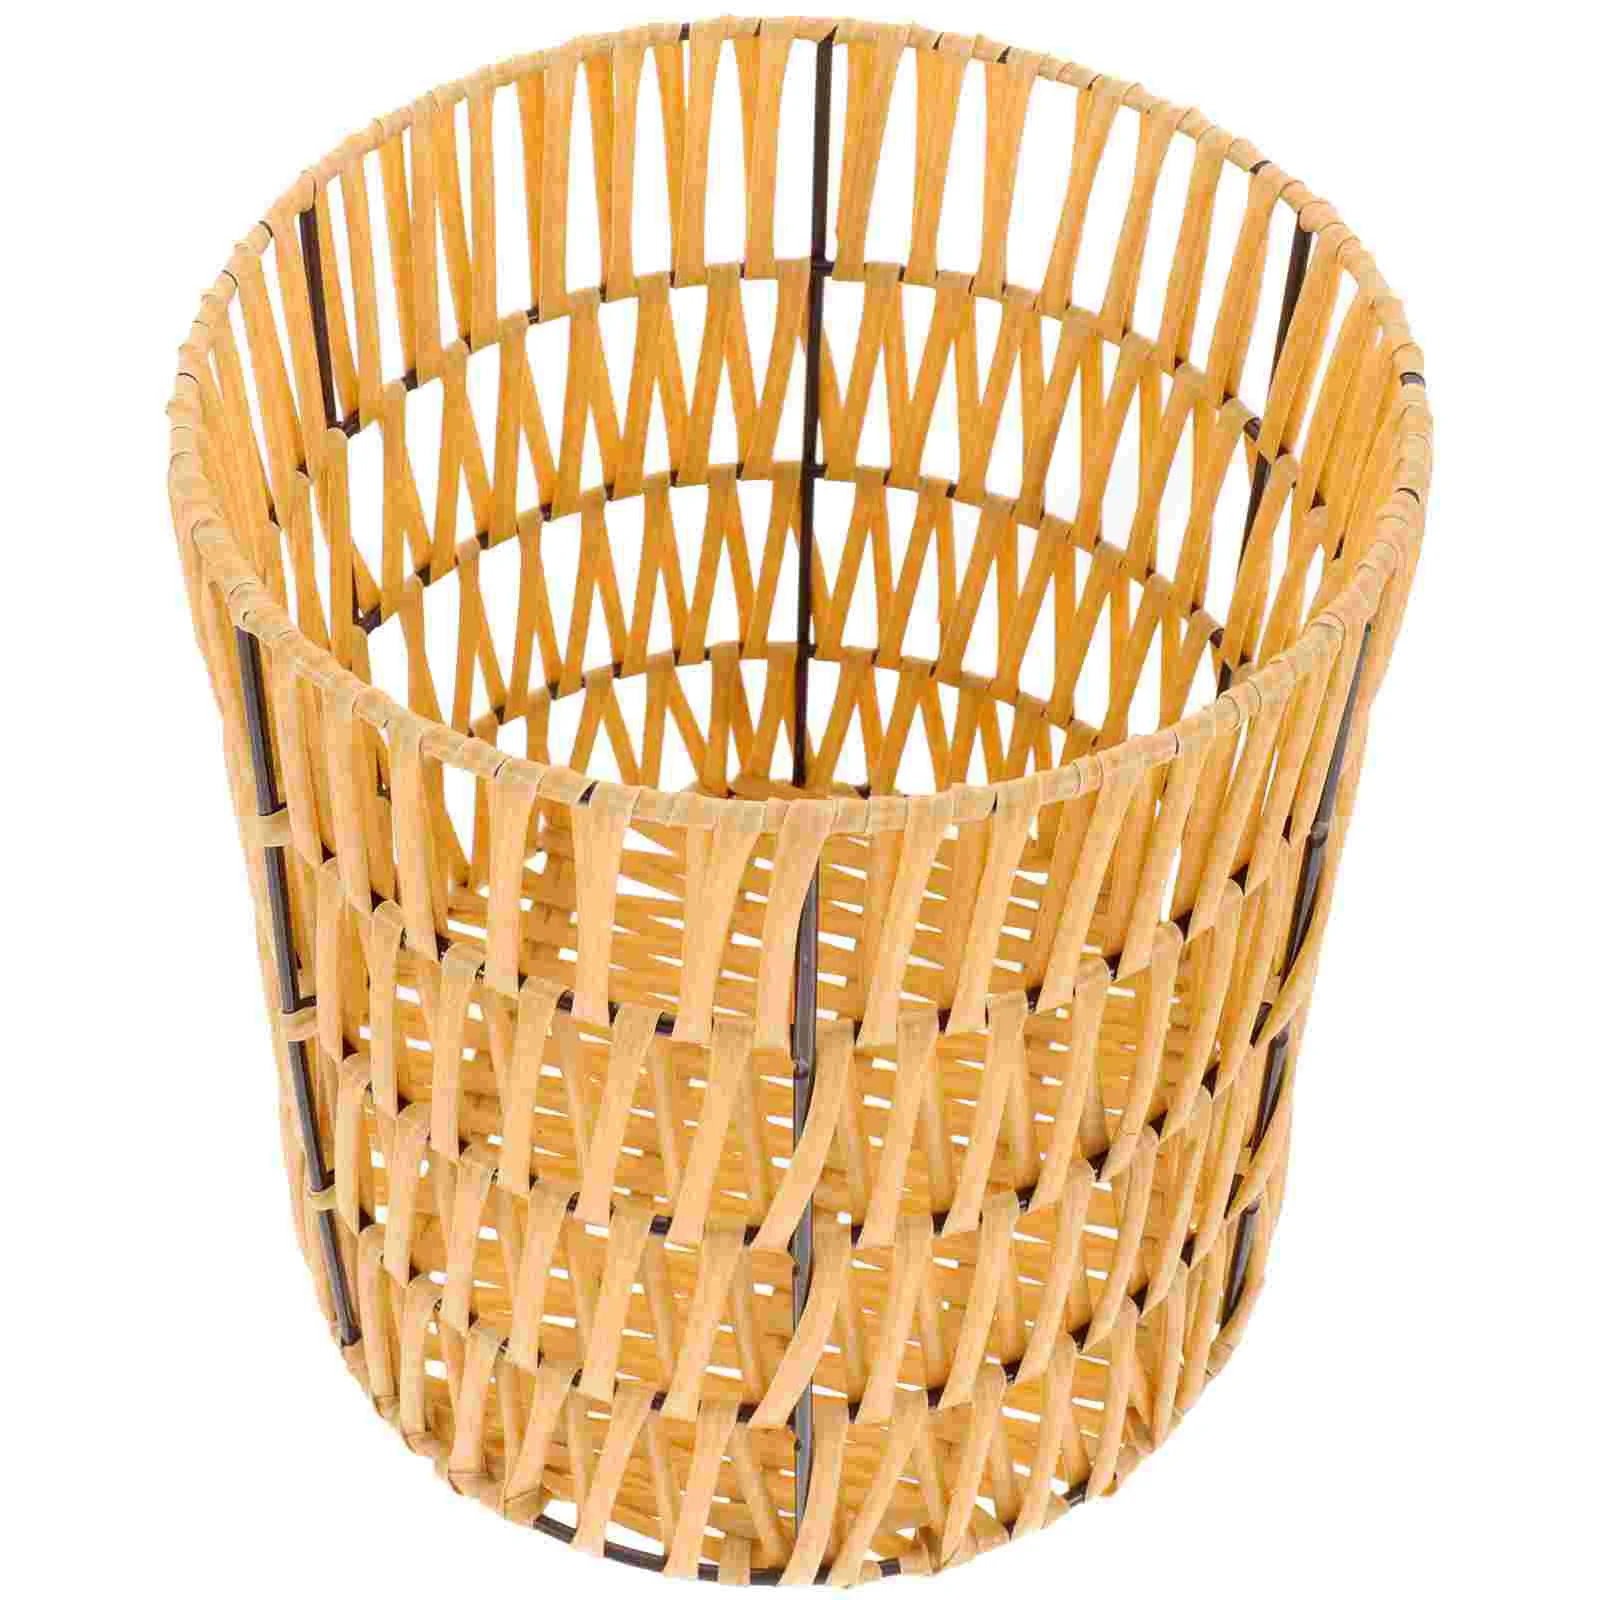 

Basket Woven Trash Bin Wicker Rattan Waste Storage Can Garbage Laundry Baskets Seagrass Planter Toy Flower Paper Straw Organizer